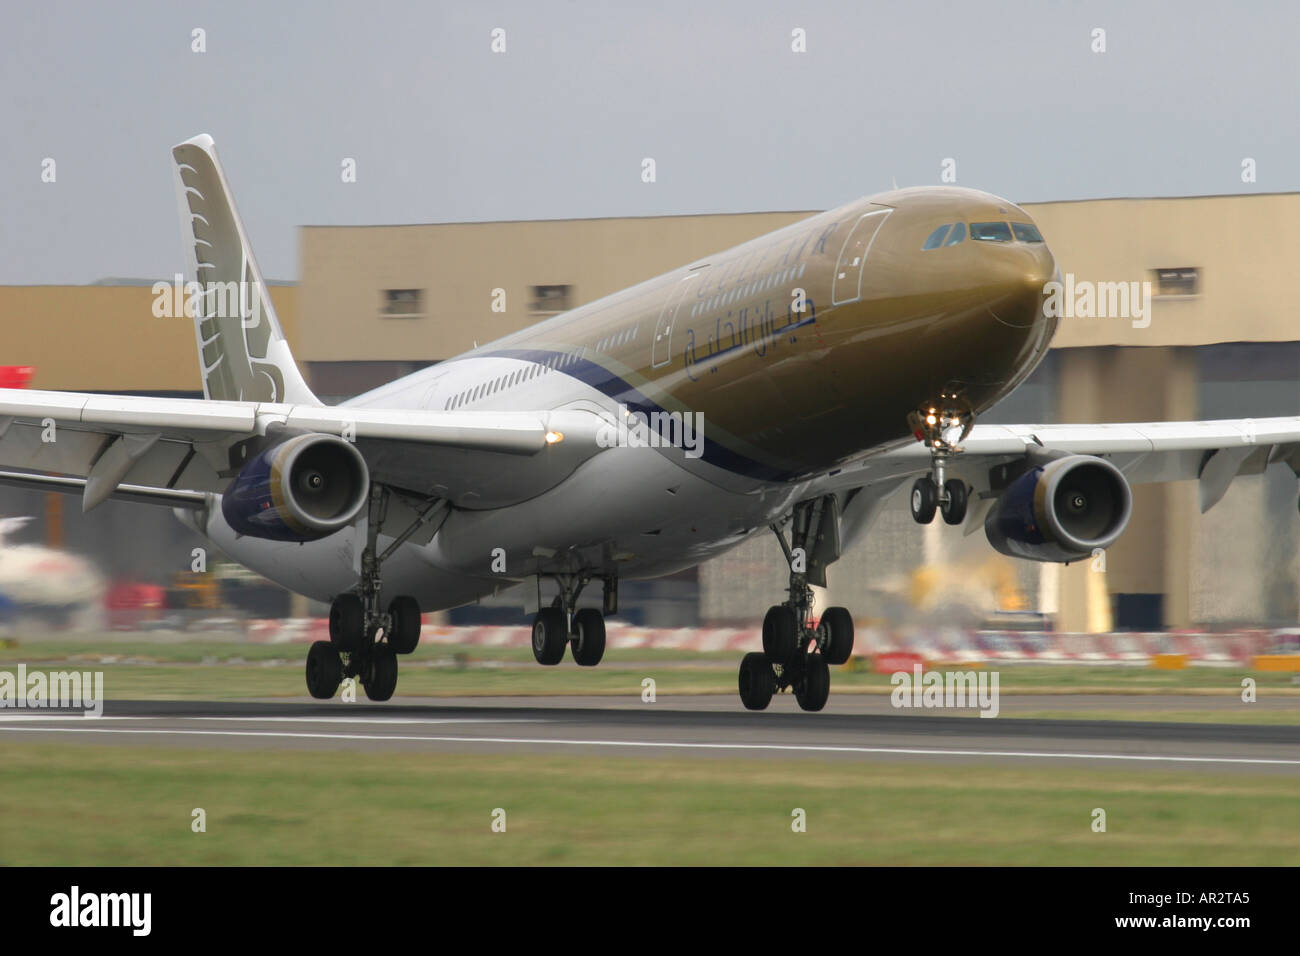 Gulf Air Airbus A340 313X landing at London Heathrow Airport UK Stock Photo